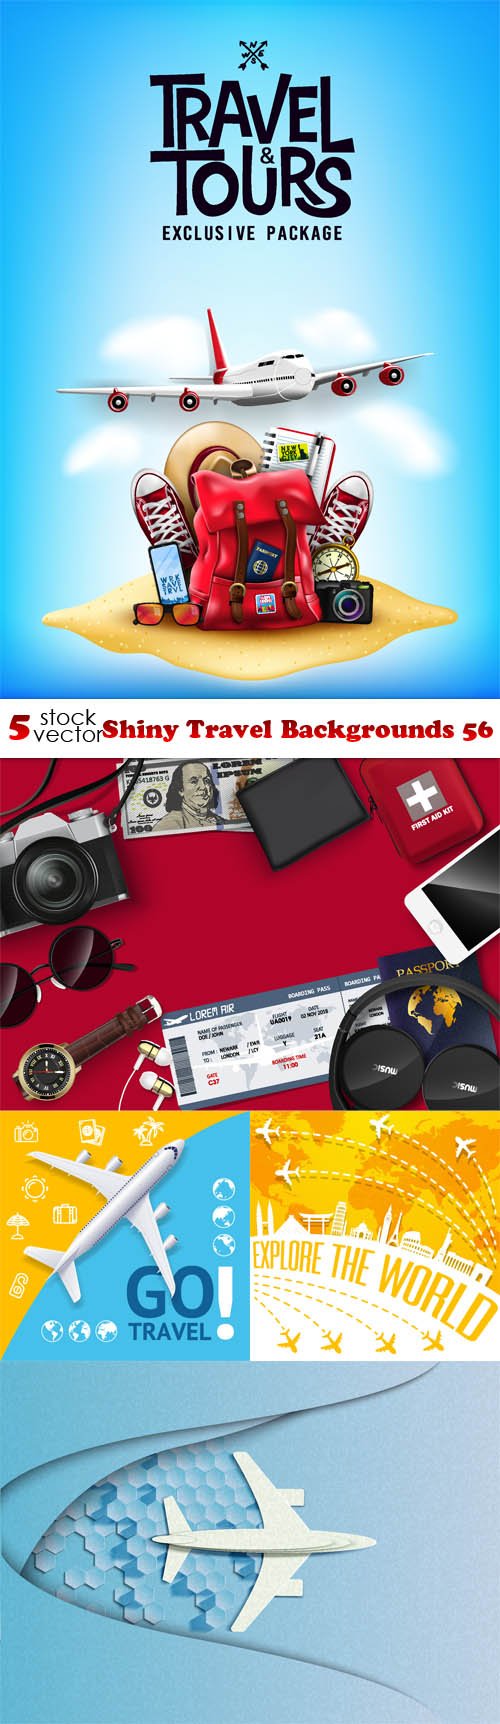 Vectors - Shiny Travel Backgrounds 56